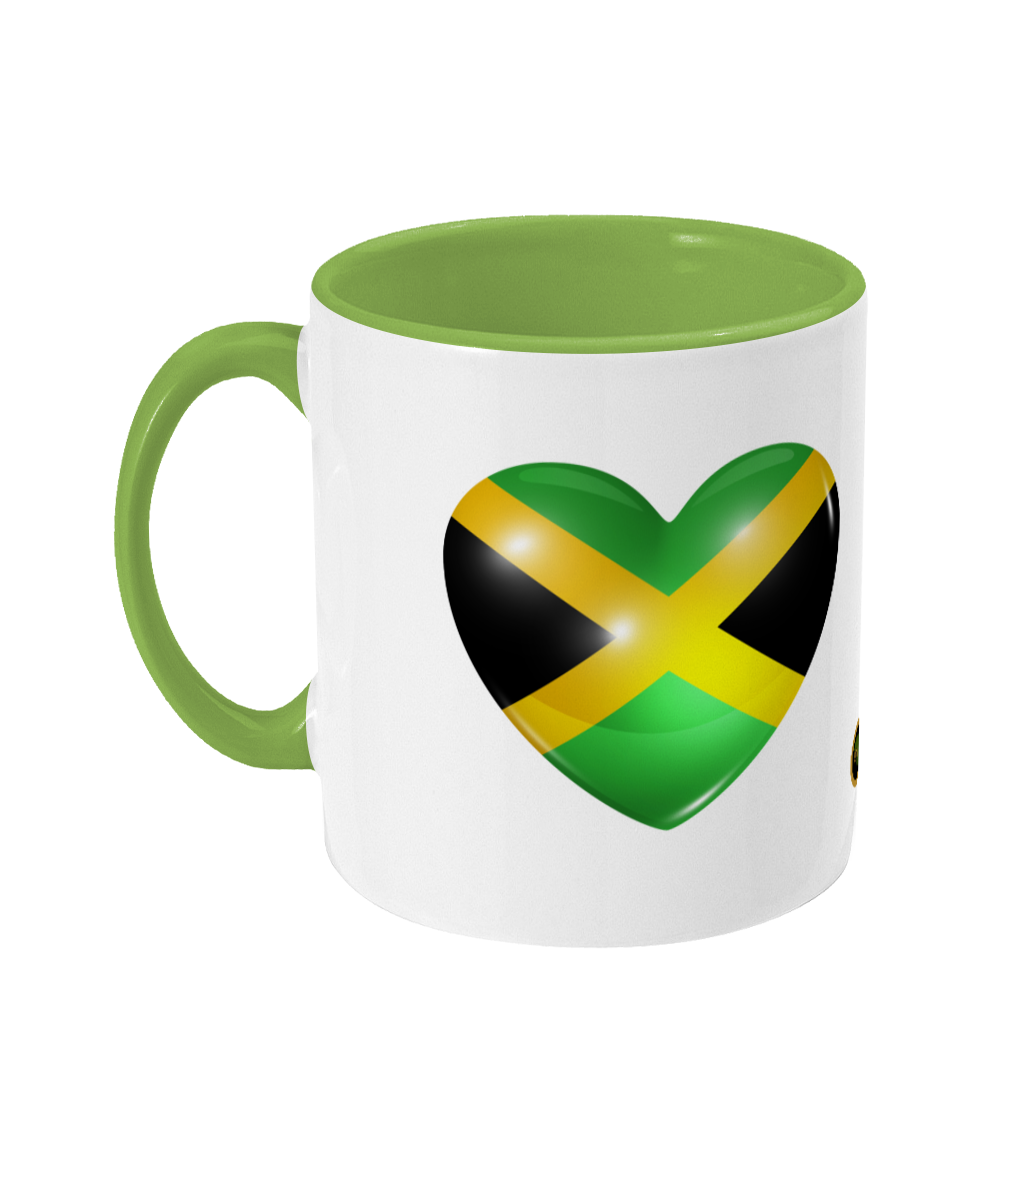 Jamaica Ghana Heart Mug